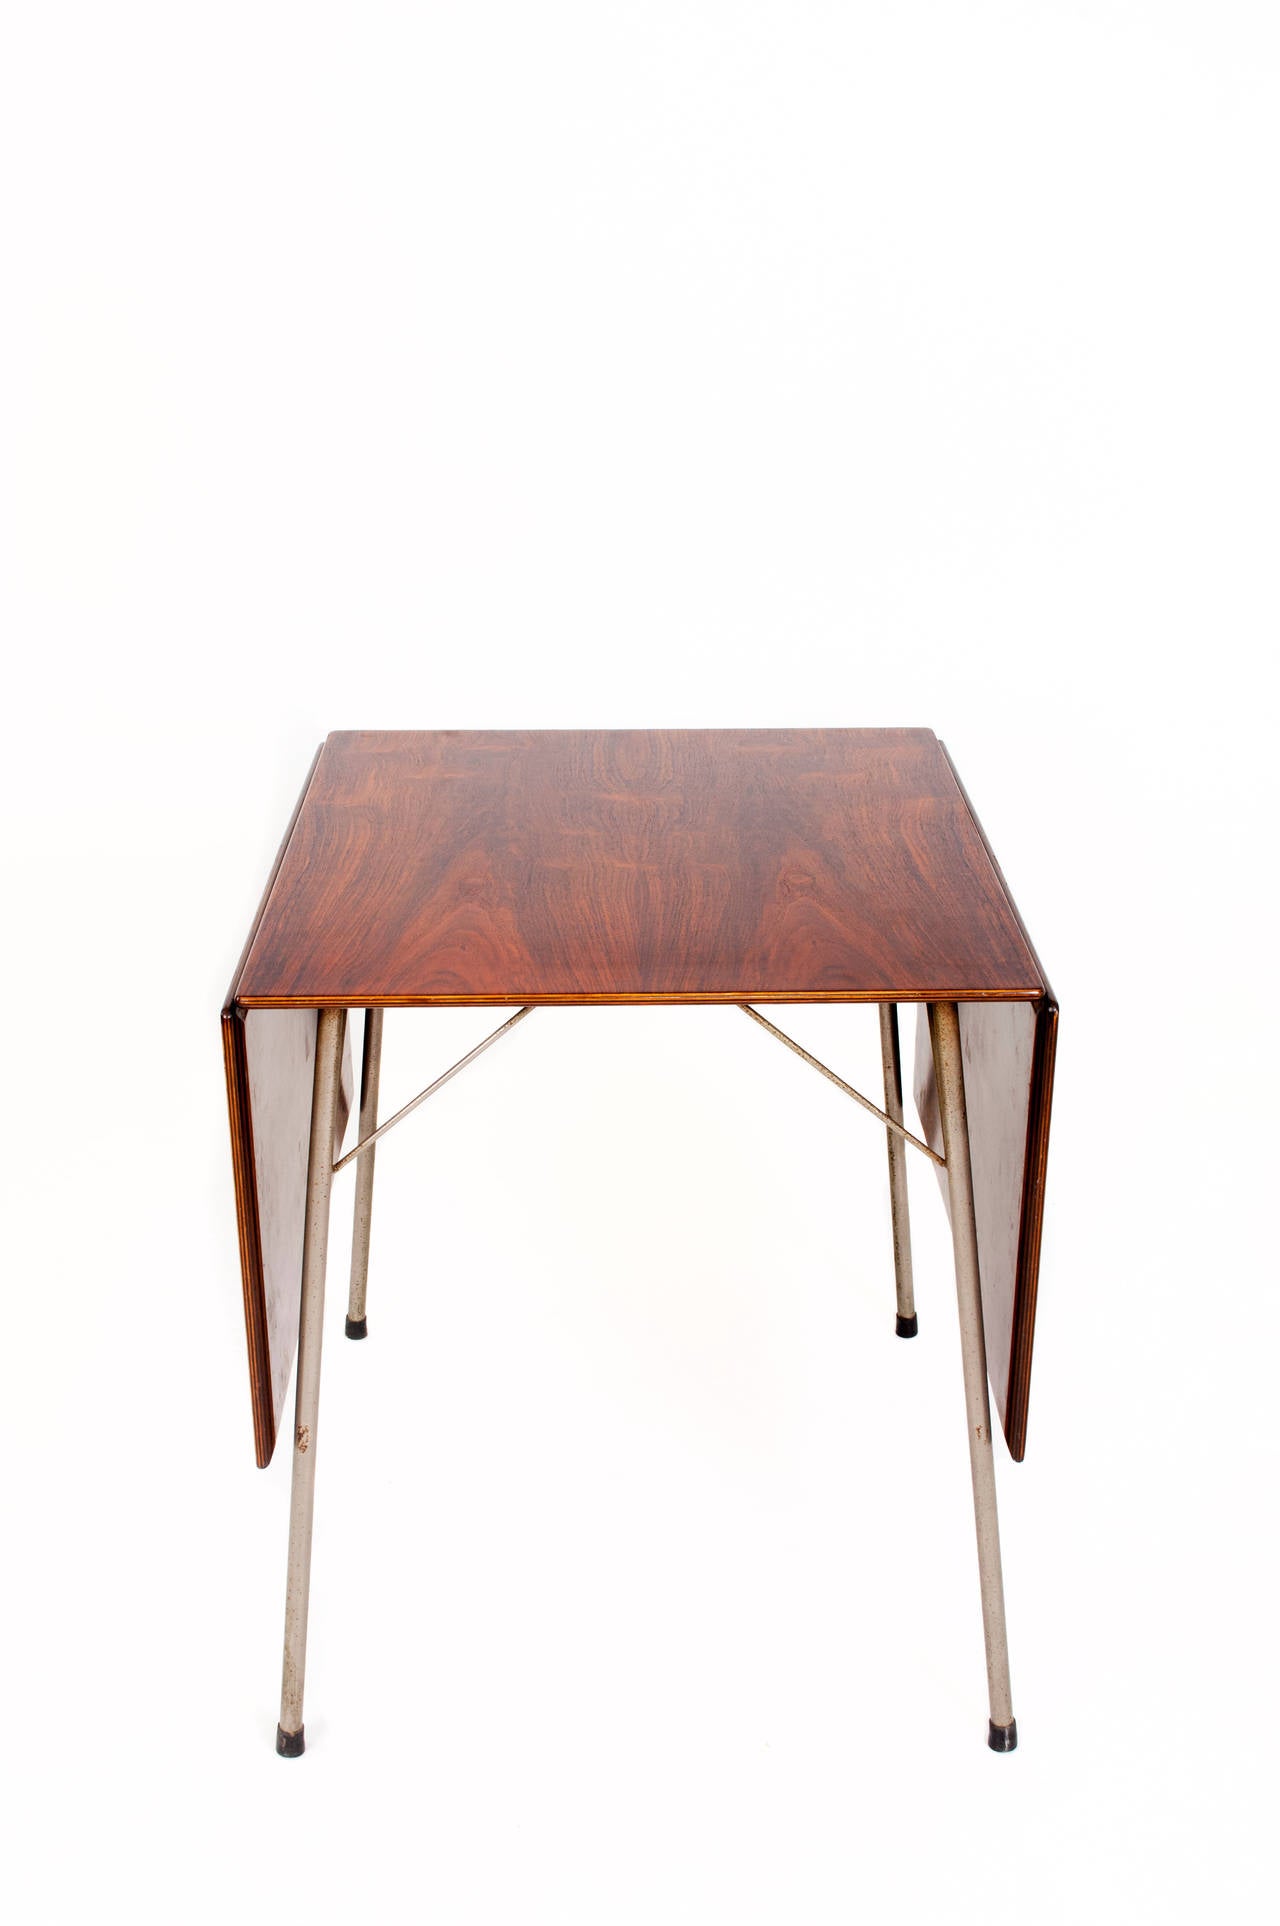 Danish Arne Jacobsen Rosewood Drop-Leaf Table for Fritz Hansen